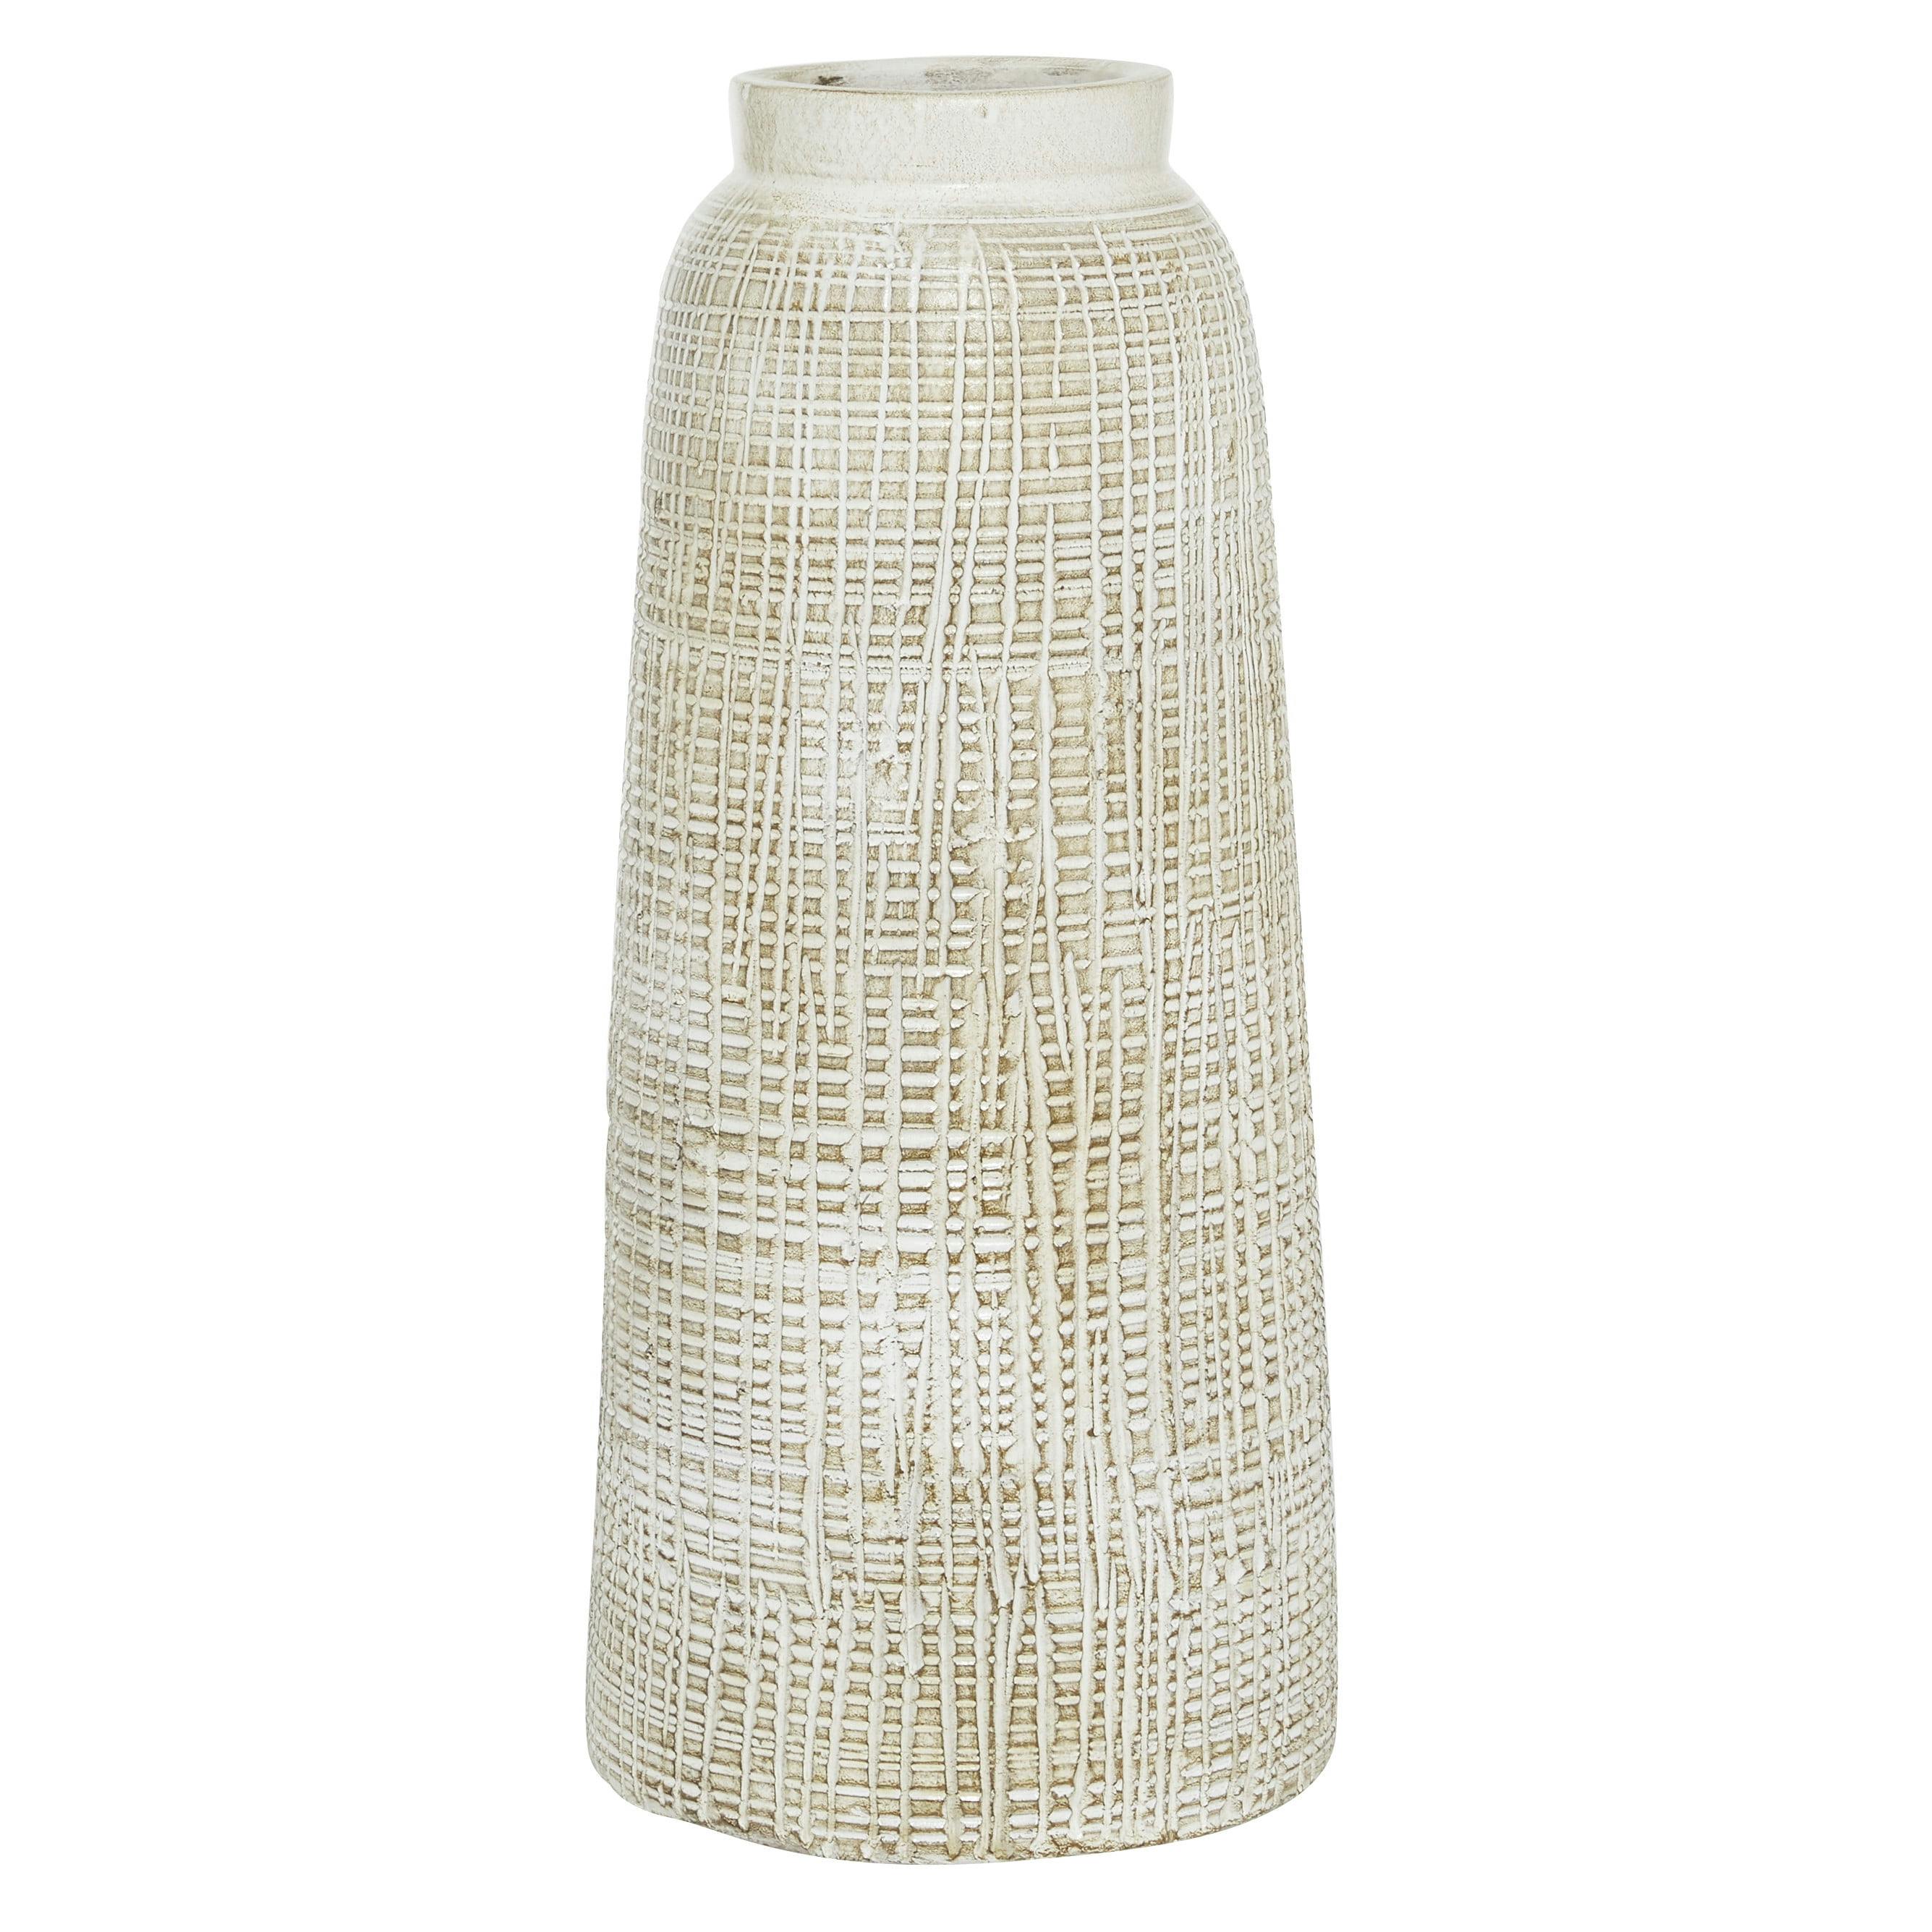 Coastal Charm 17" White Ceramic Textured Vase